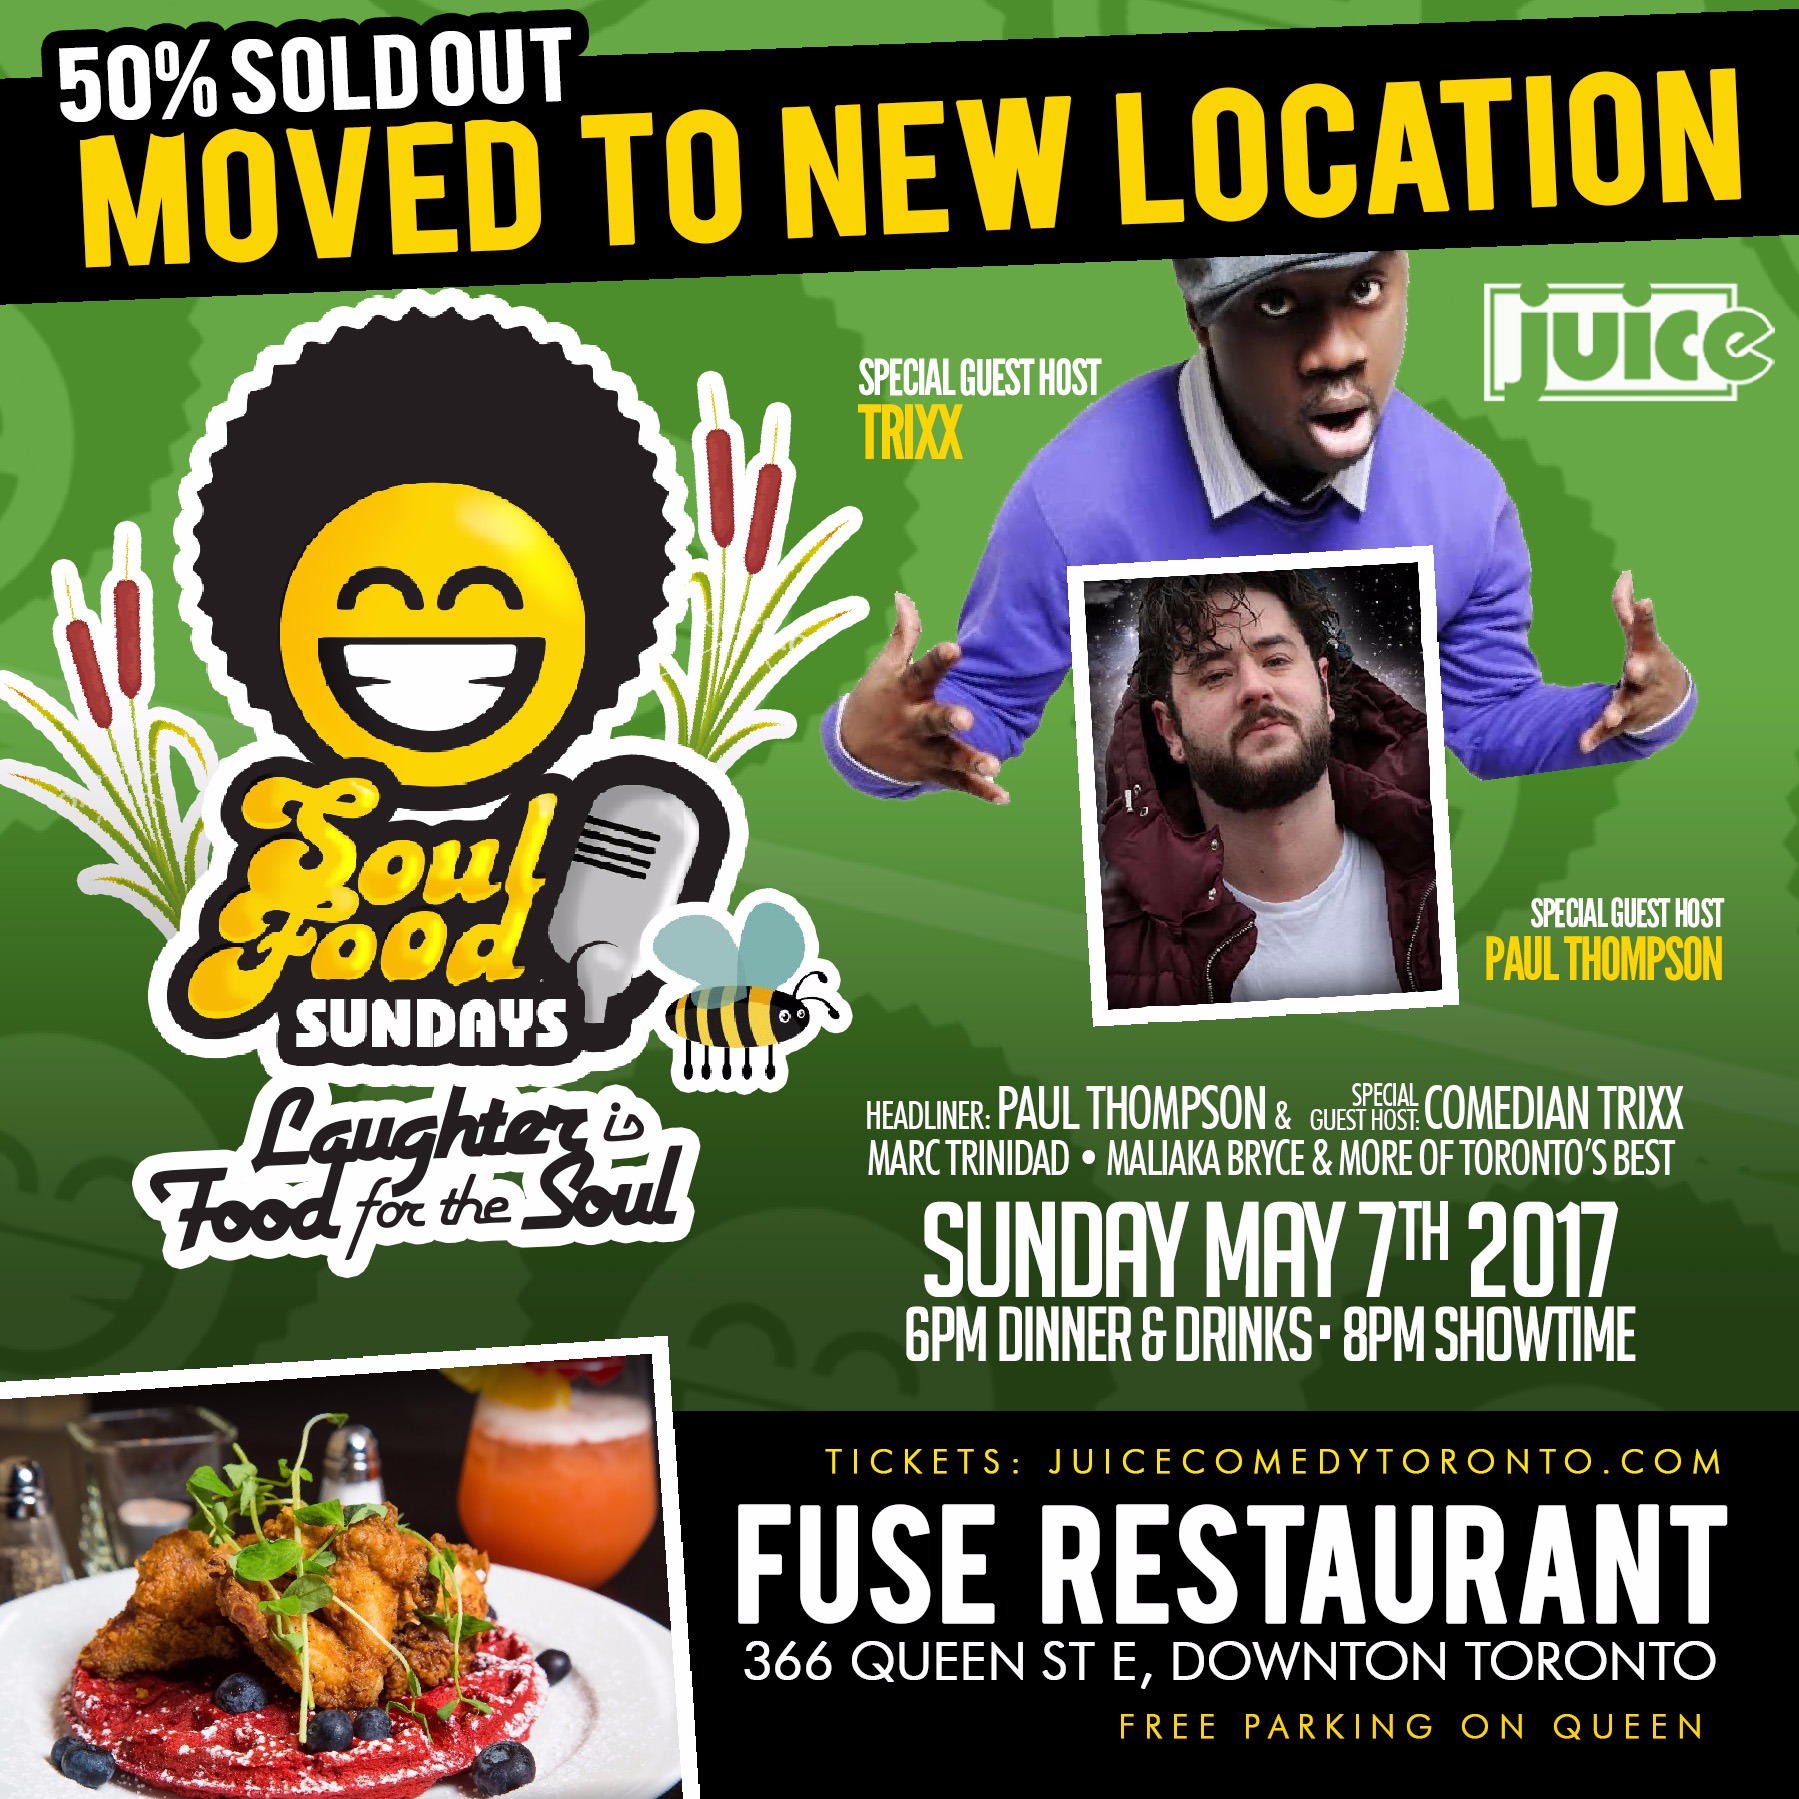 JUICE presents Soul Food Sundays MOVED TO FUSE RESTAURANT